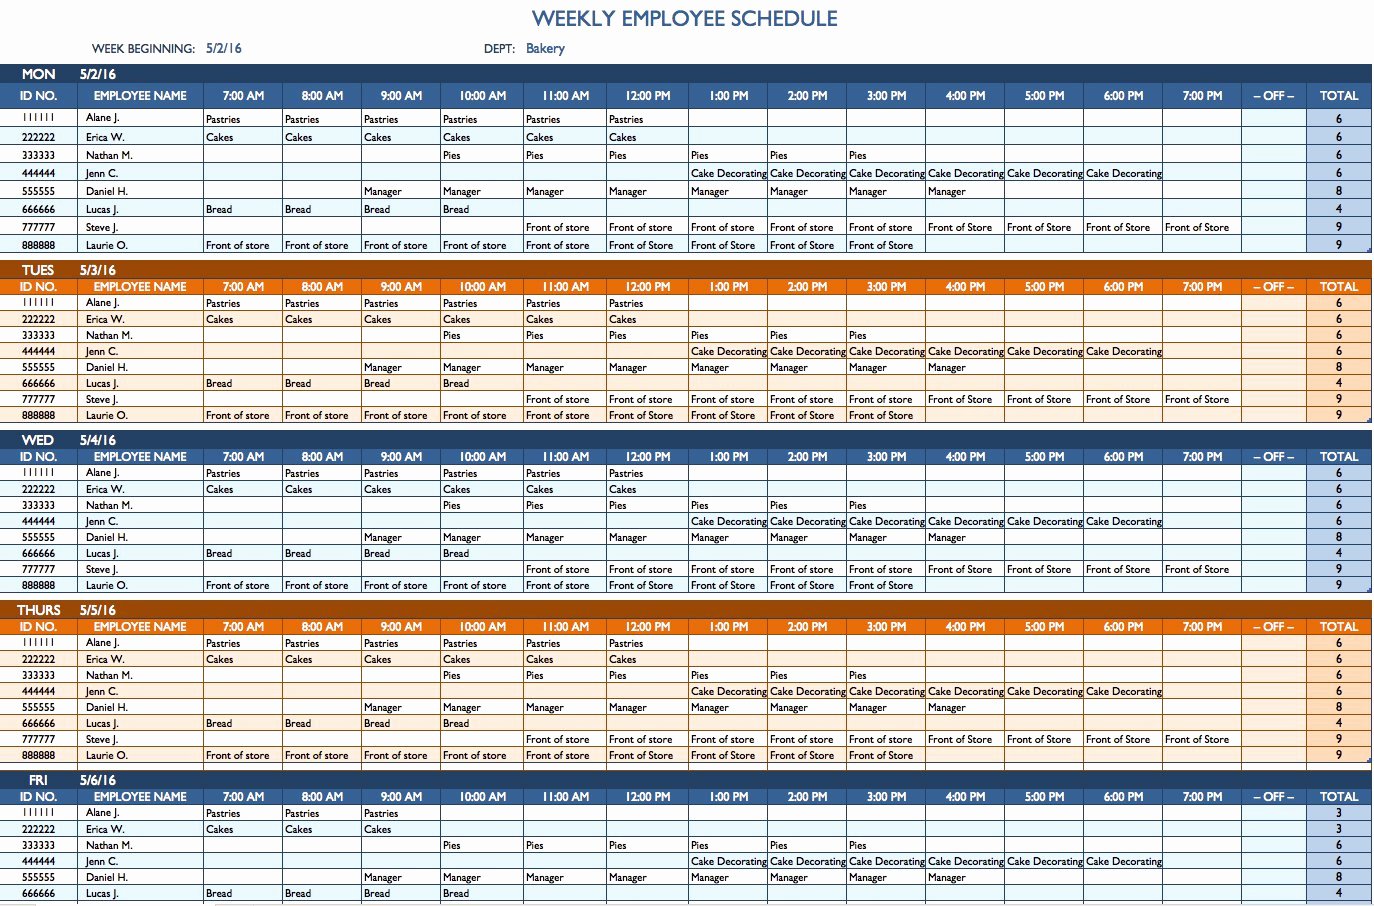 Monthly Employee Schedule Template Excel Unique Free Weekly Schedule Templates for Excel Smartsheet